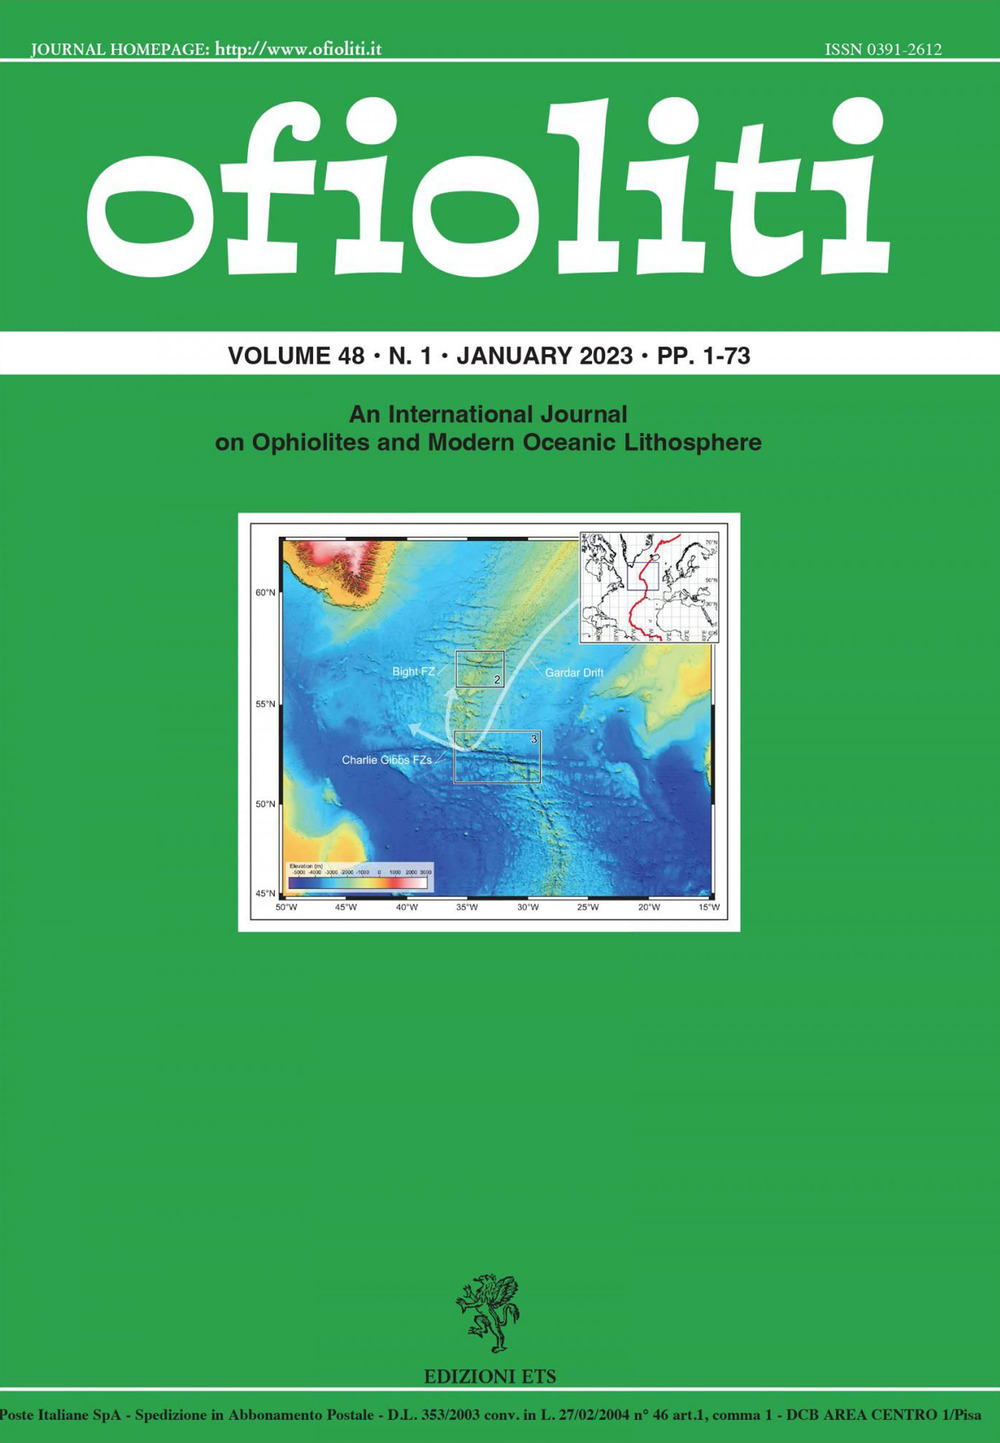 Ofioliti. An international journal on ophiolites and modern oceanic lithosphere (2023). Vol. 48/1